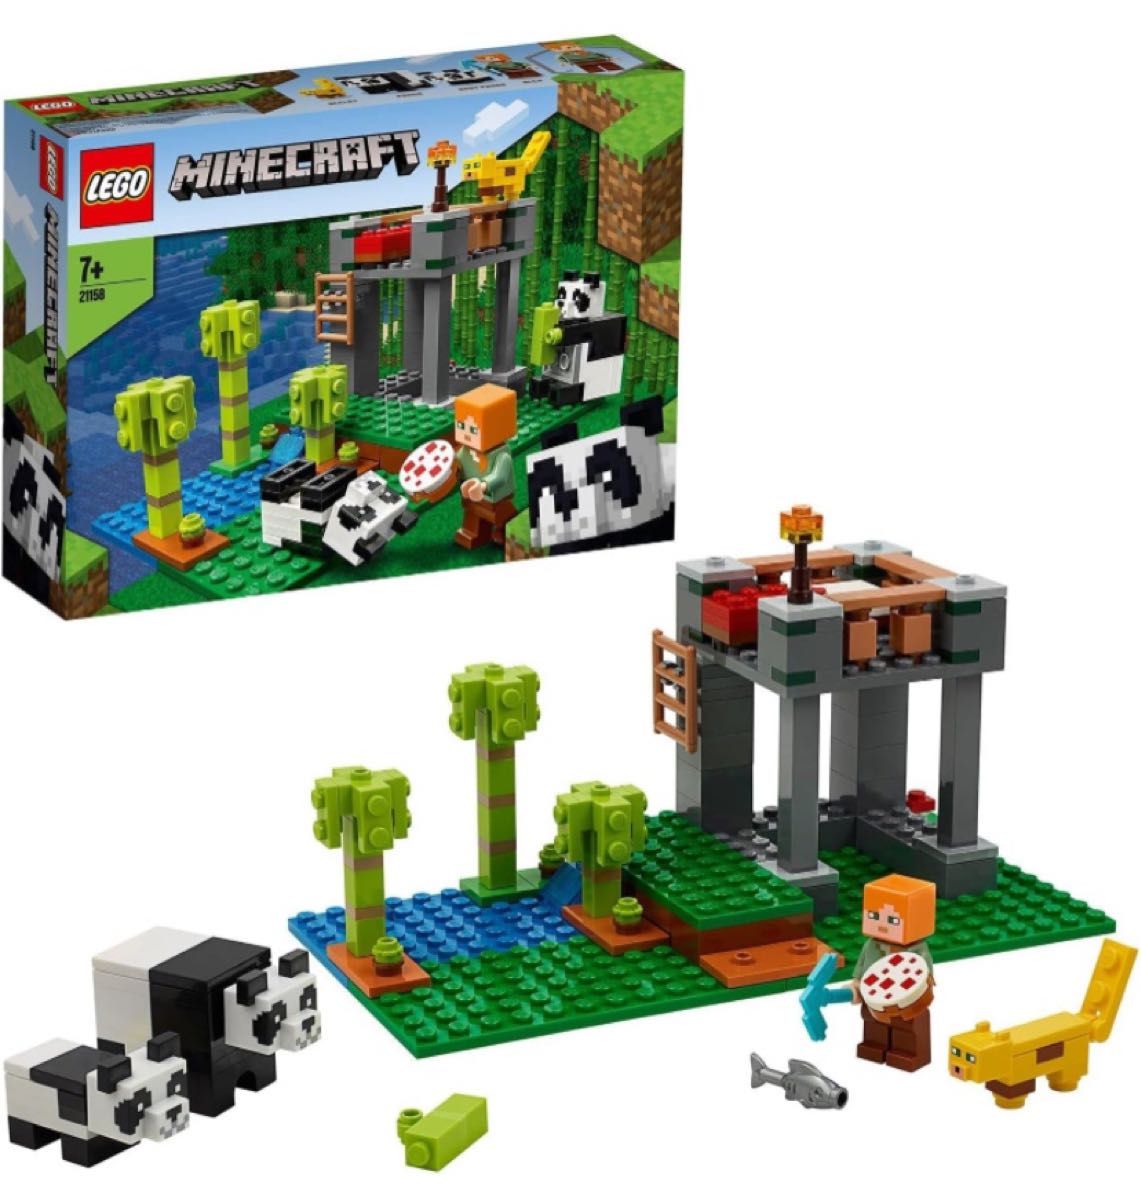 LEGO レゴ MINECRAFT マインクラフト パンダ保育園 21158